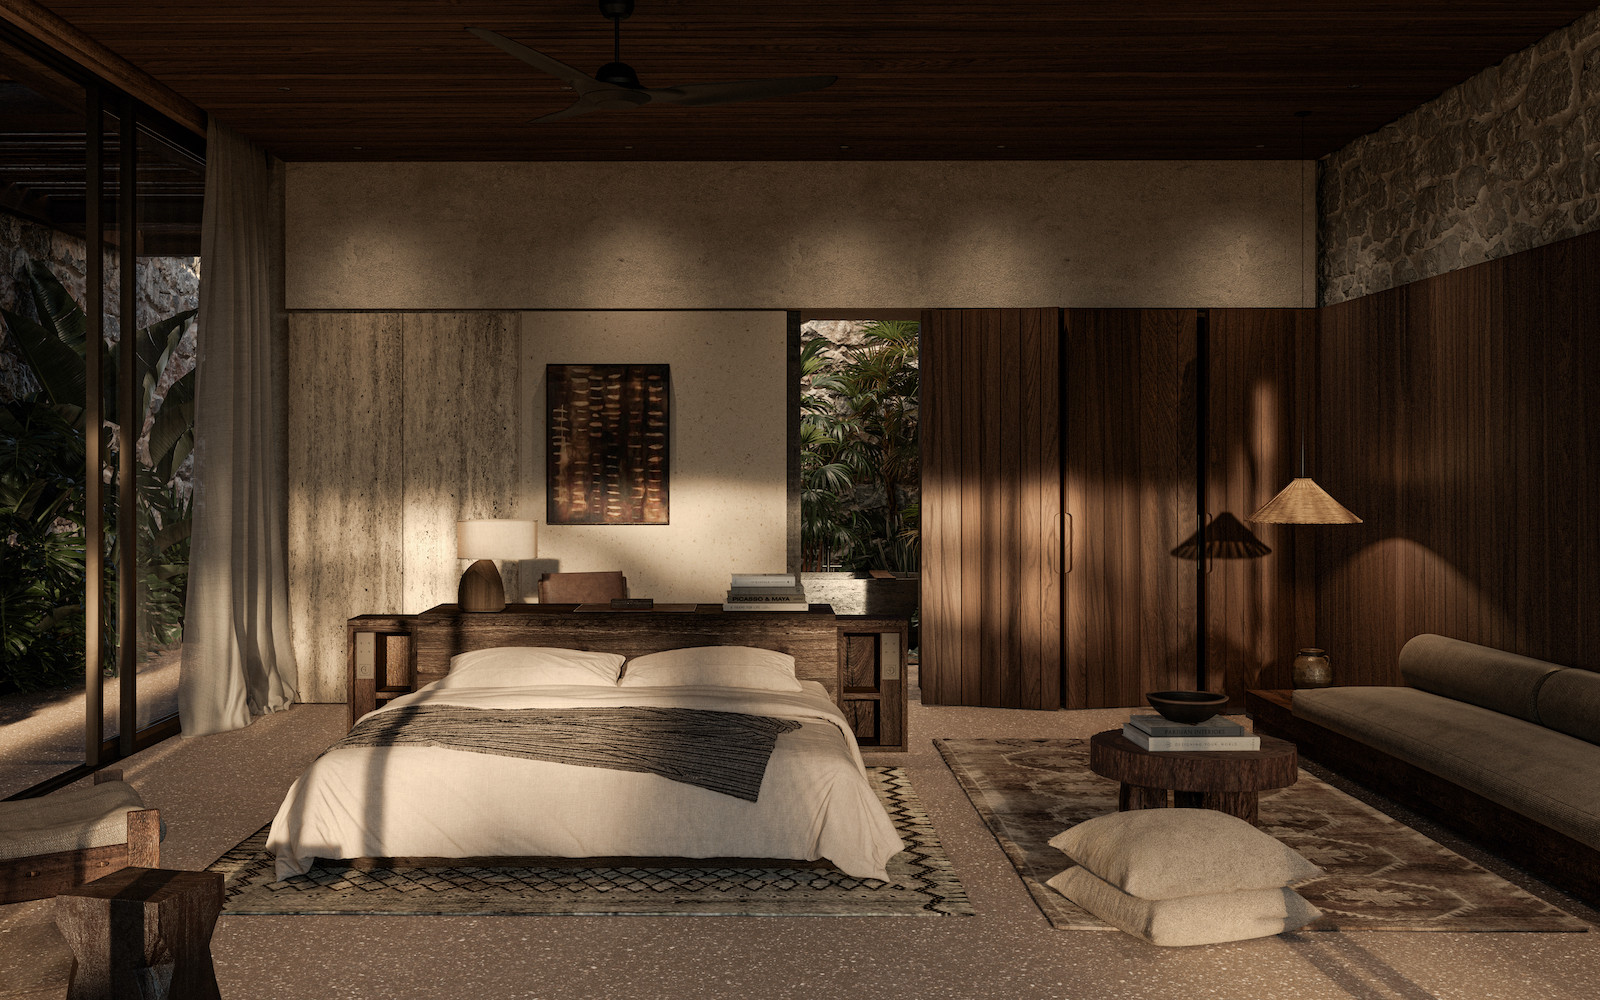 Bedroom concept - designed in an minimalist